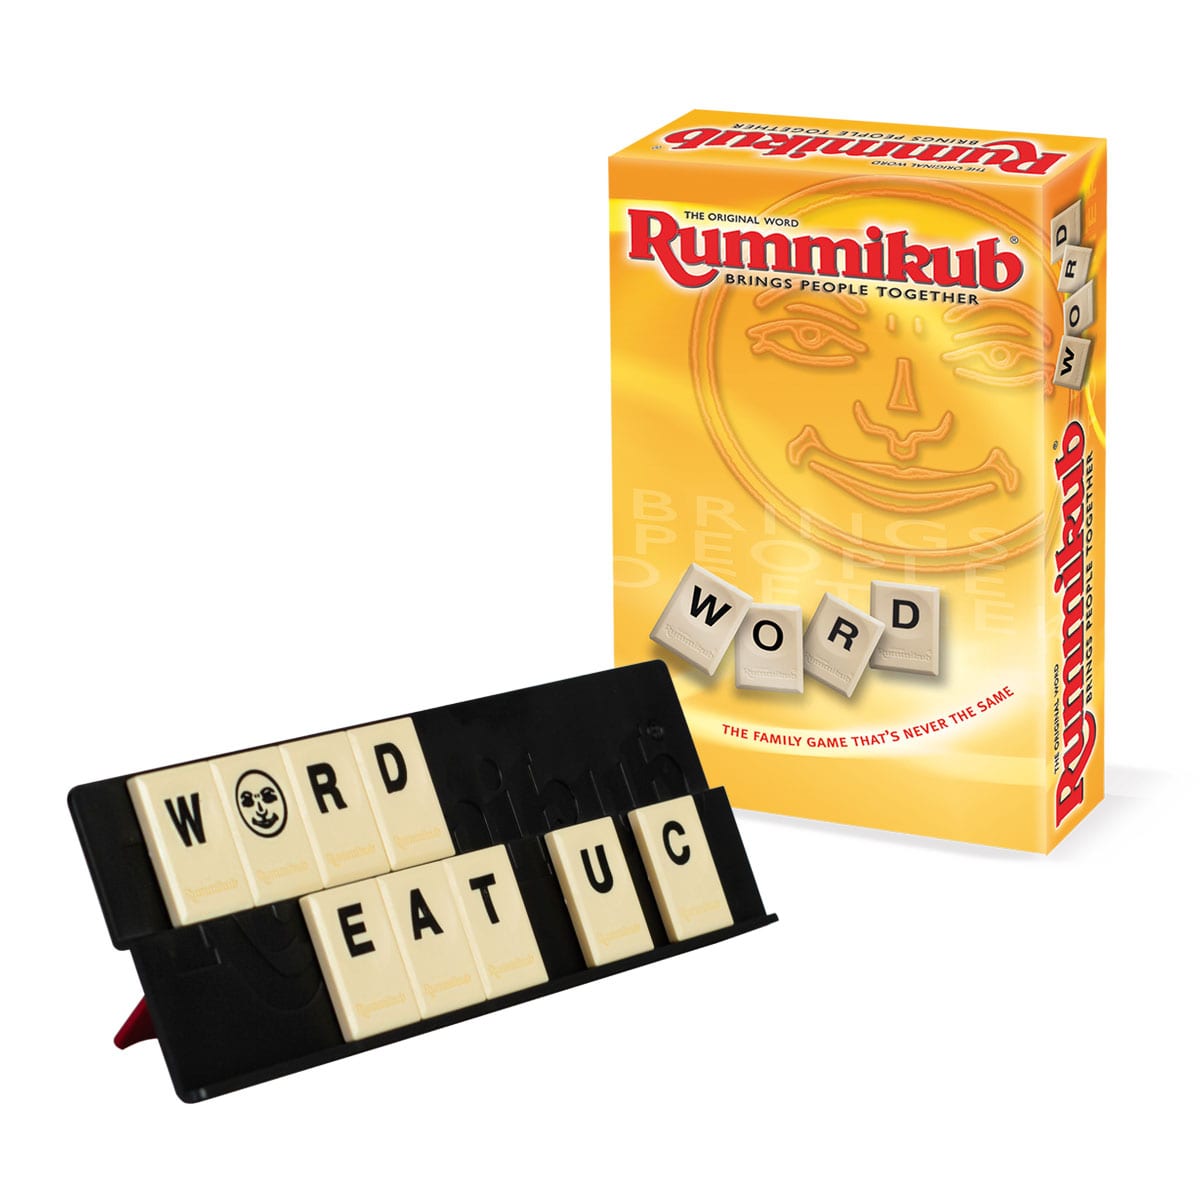 Arbeid Haalbaar Tranen Rummikub® Mini Word - Rummikub